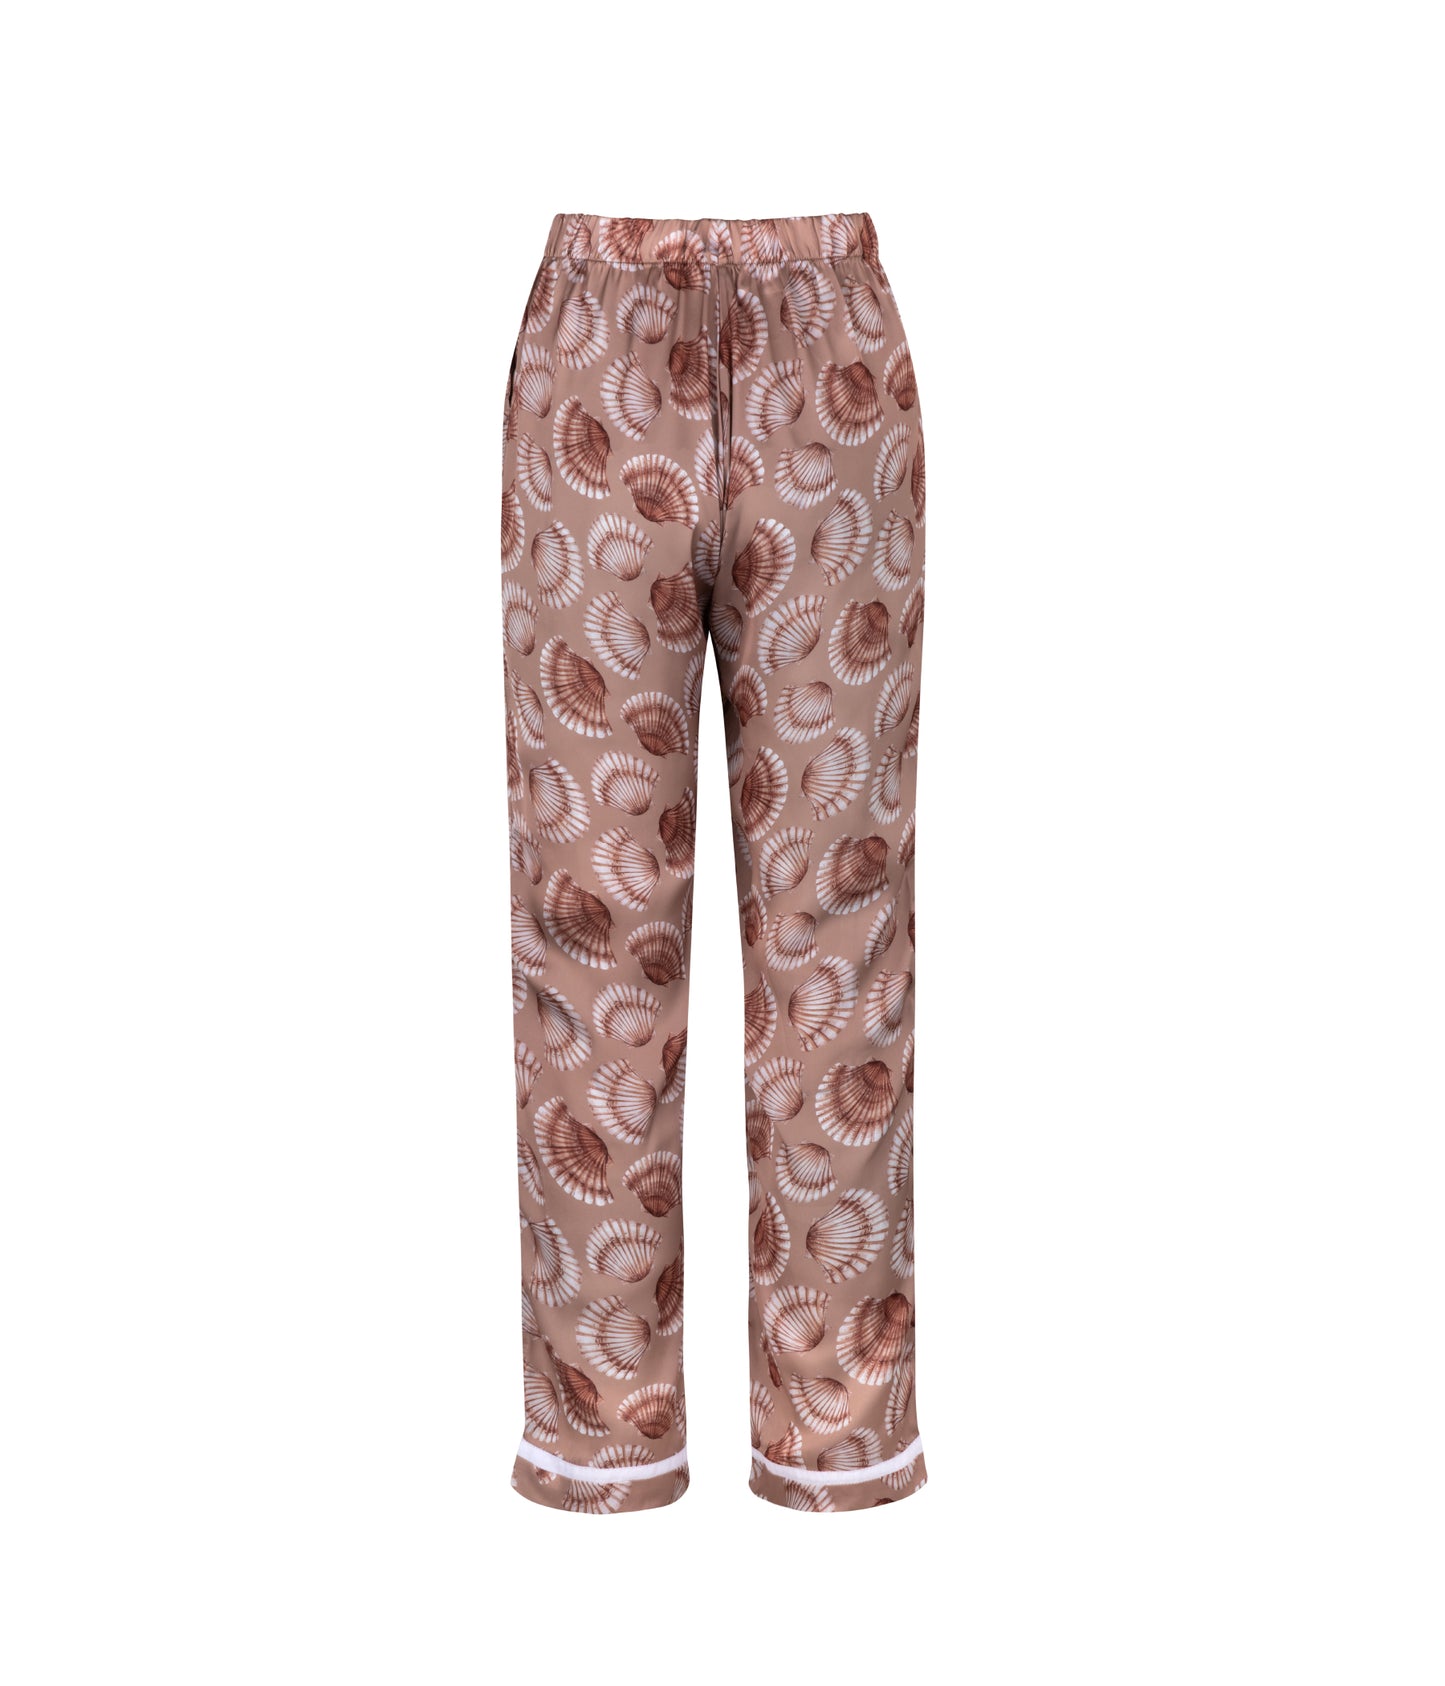 Verdelimon - Pants - Maui - Printed - Brown Shells - Back